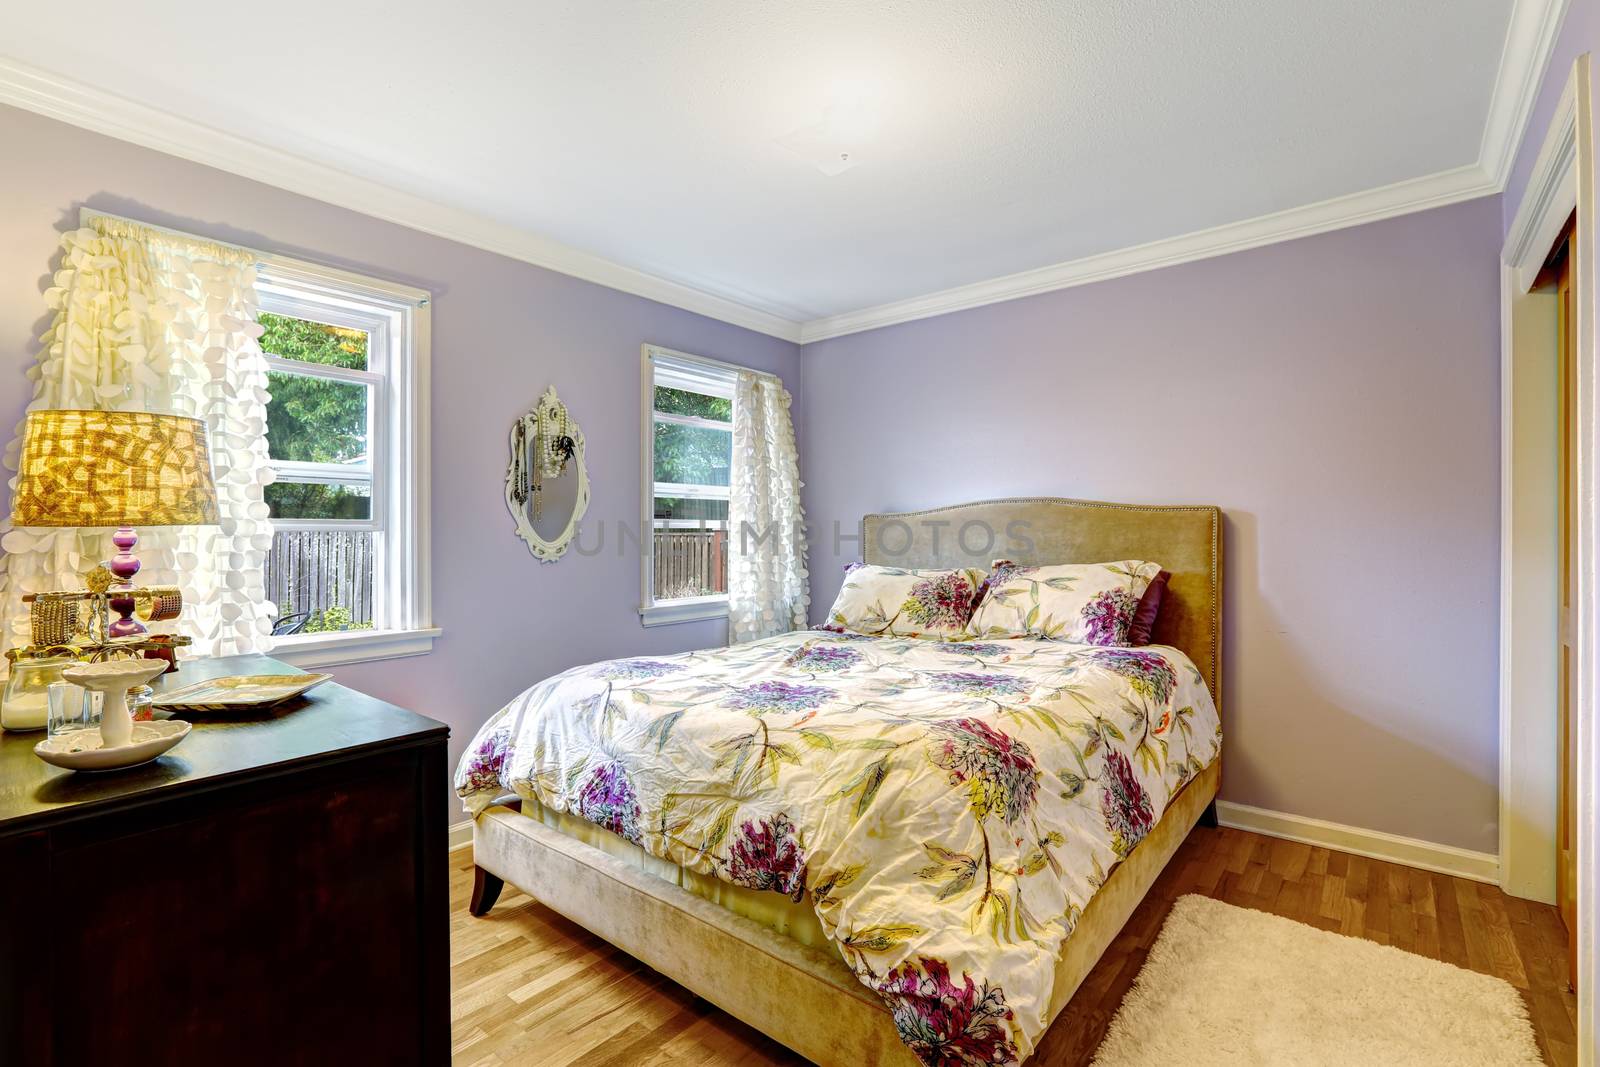 Bedroom in light lavender color with ivory floral bedding